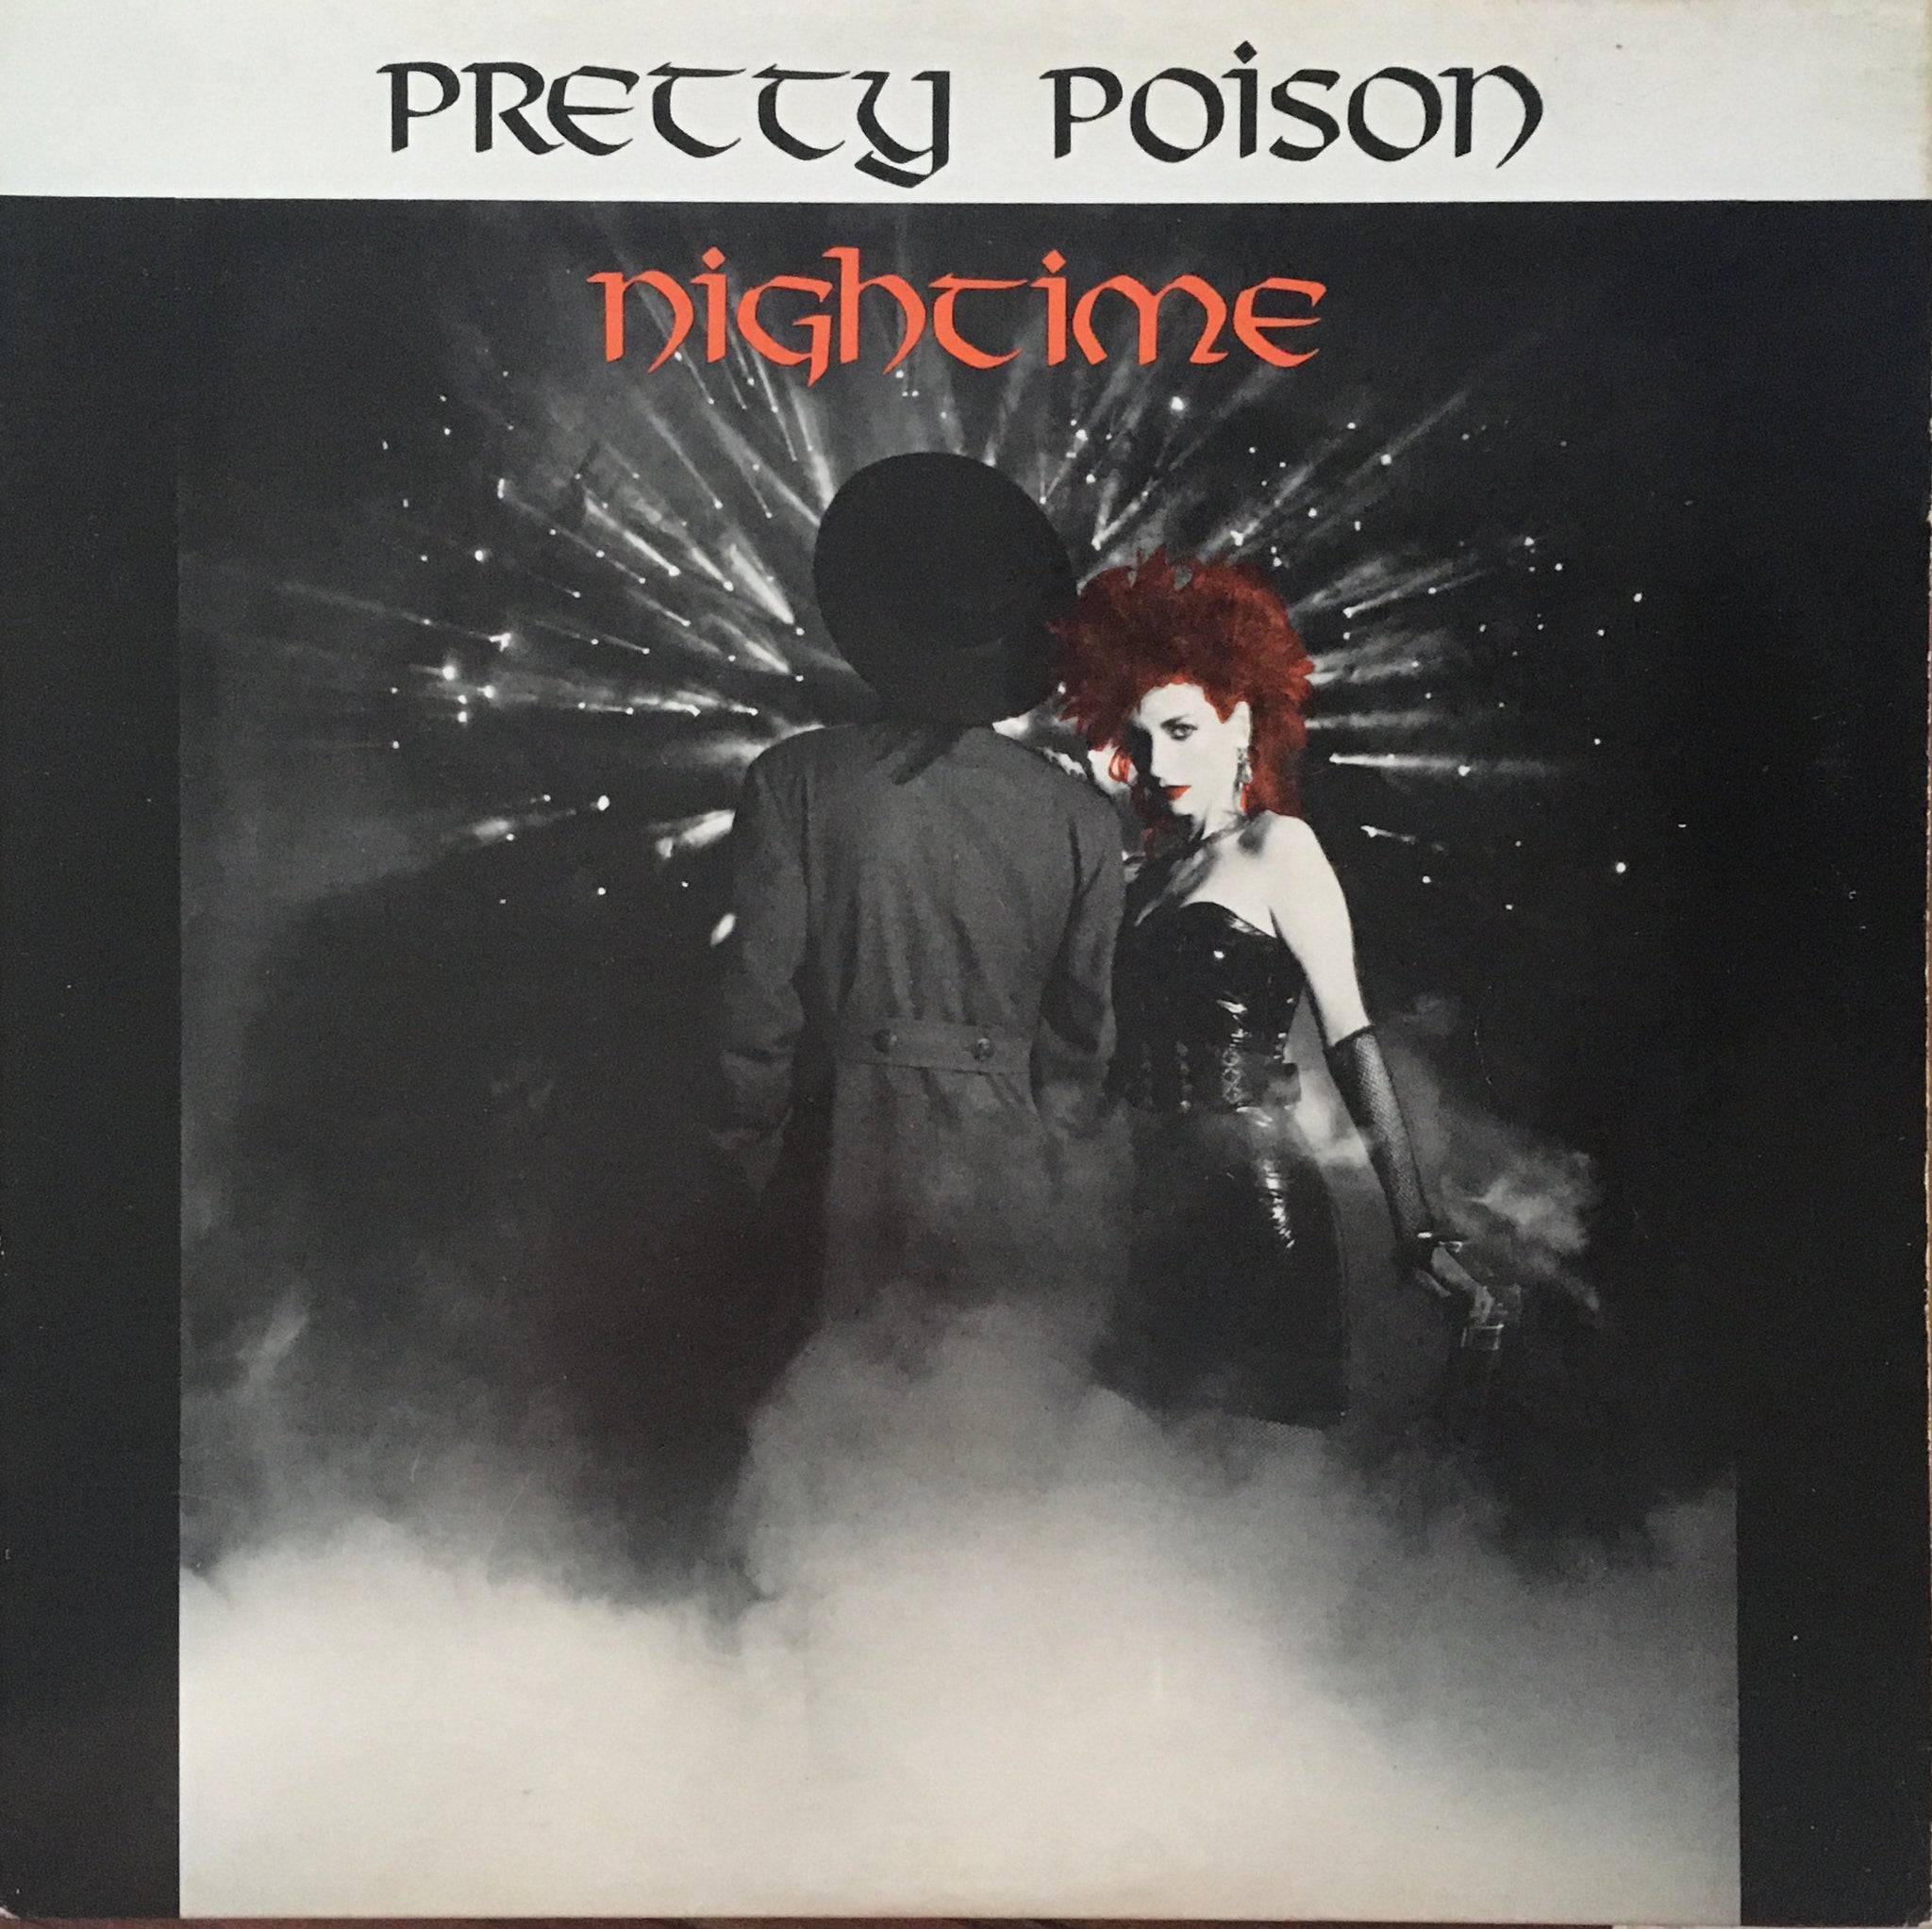 Pretty Poison “Nighttime” 12” Single (1984)